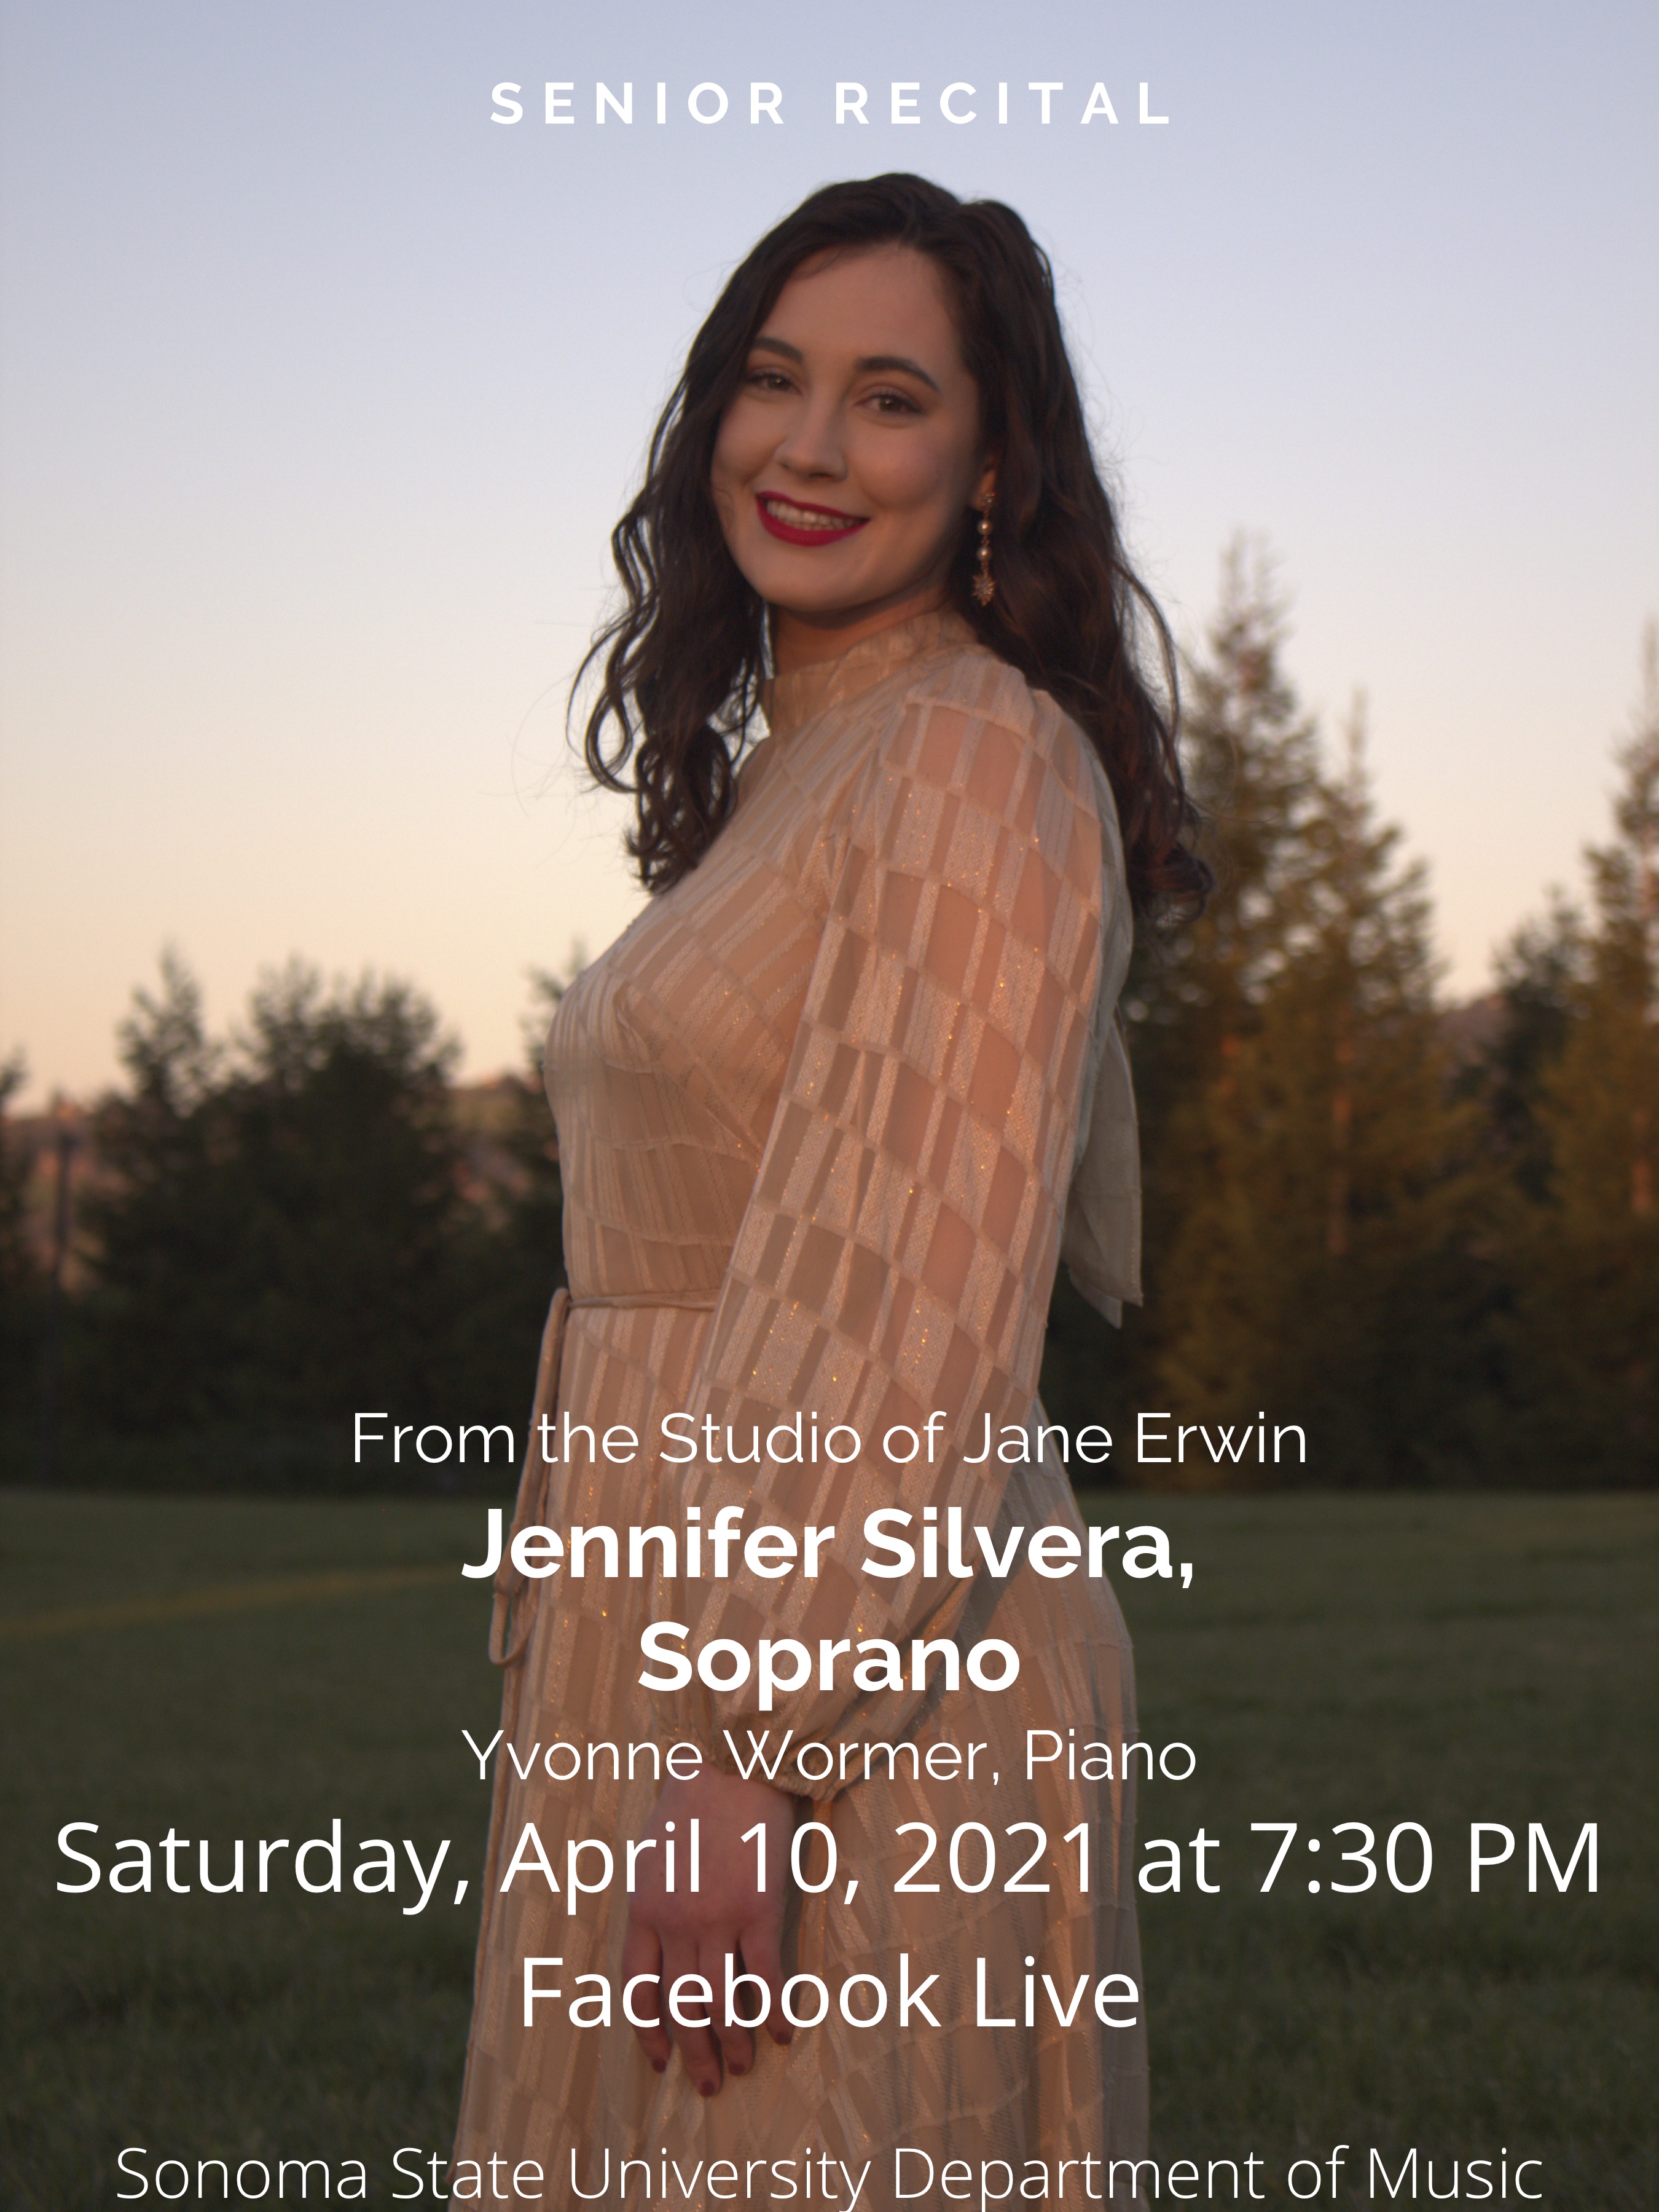 Senior Recital, From the Studio of Jane Erwin, Jennifer Silvera, Soprano, Yvonne Wormer, Piano, Saturday, April 10, 2021 at 7:30pm on Facebook Live